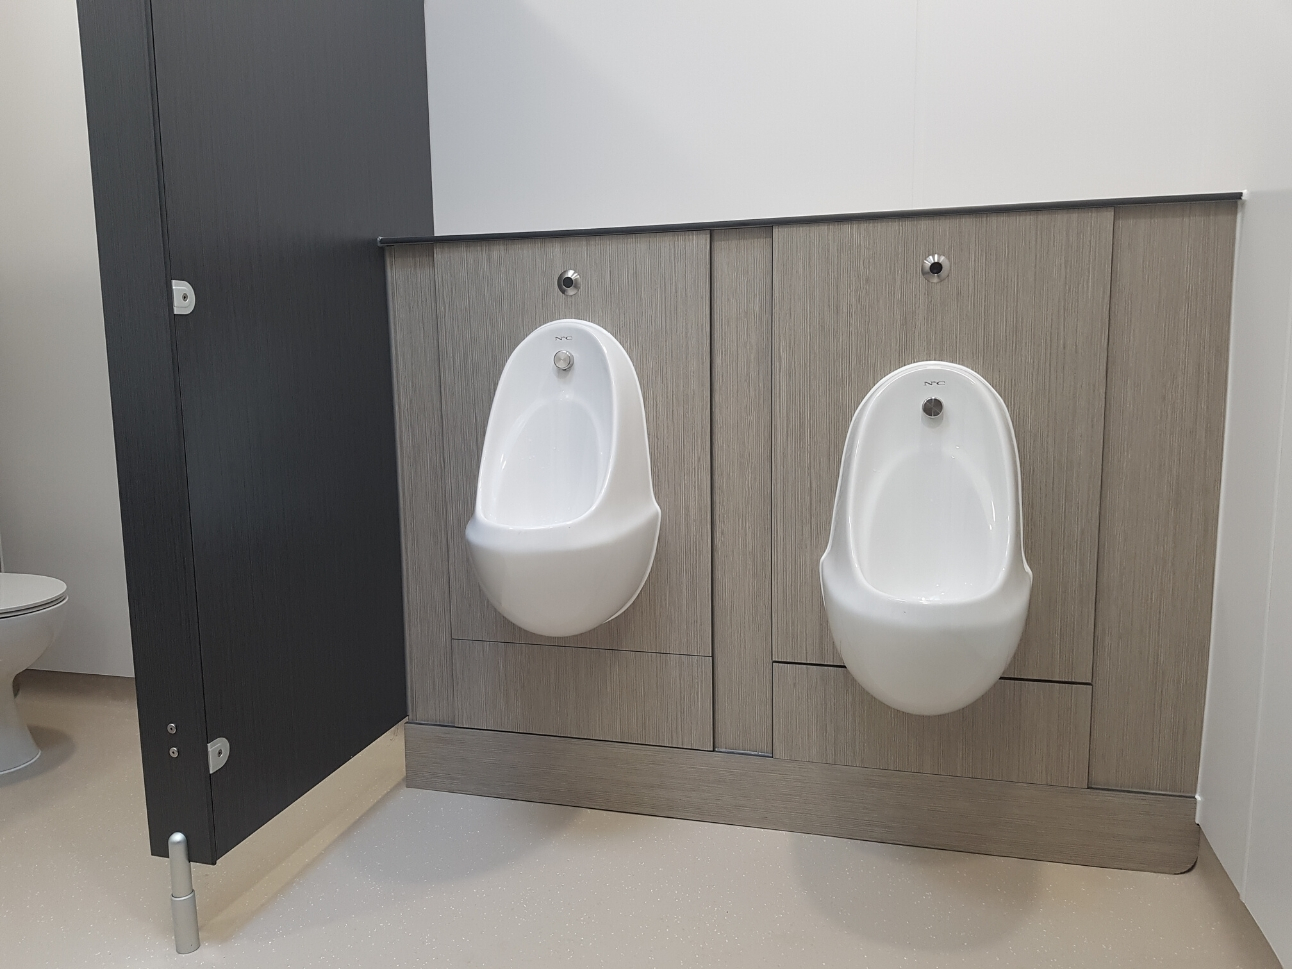 Poole Grammar School Washroom Renovation | Commercial Washrooms